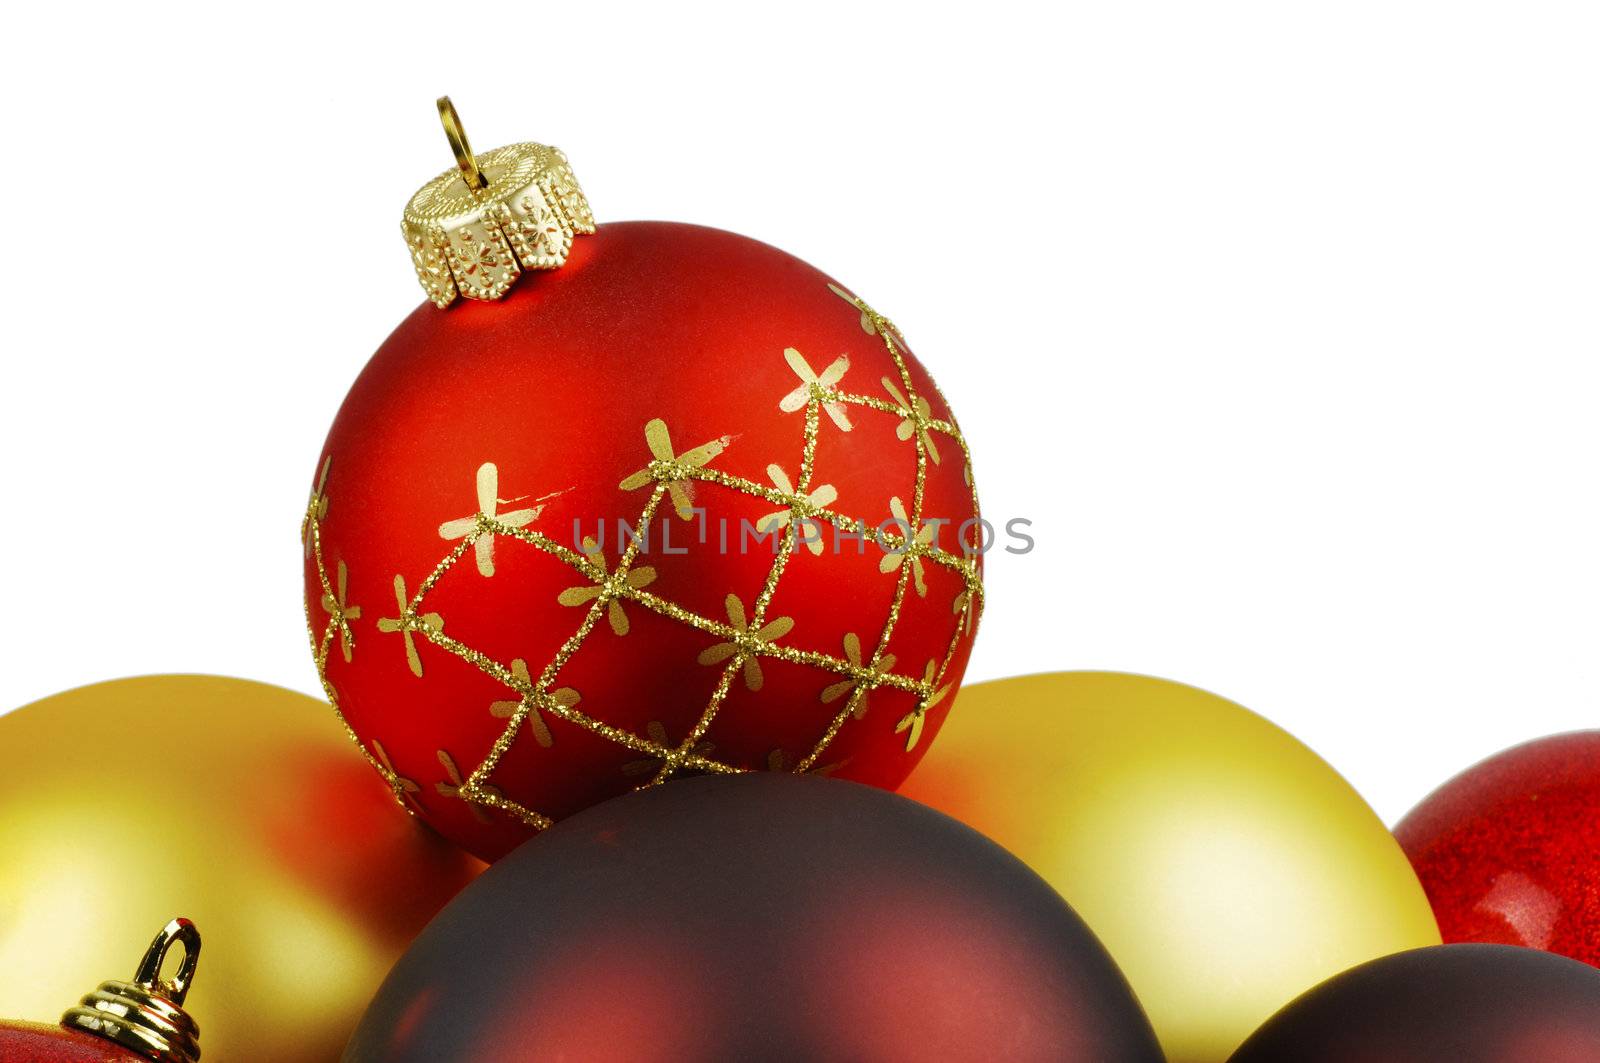 Christmas balls by dutourdumonde